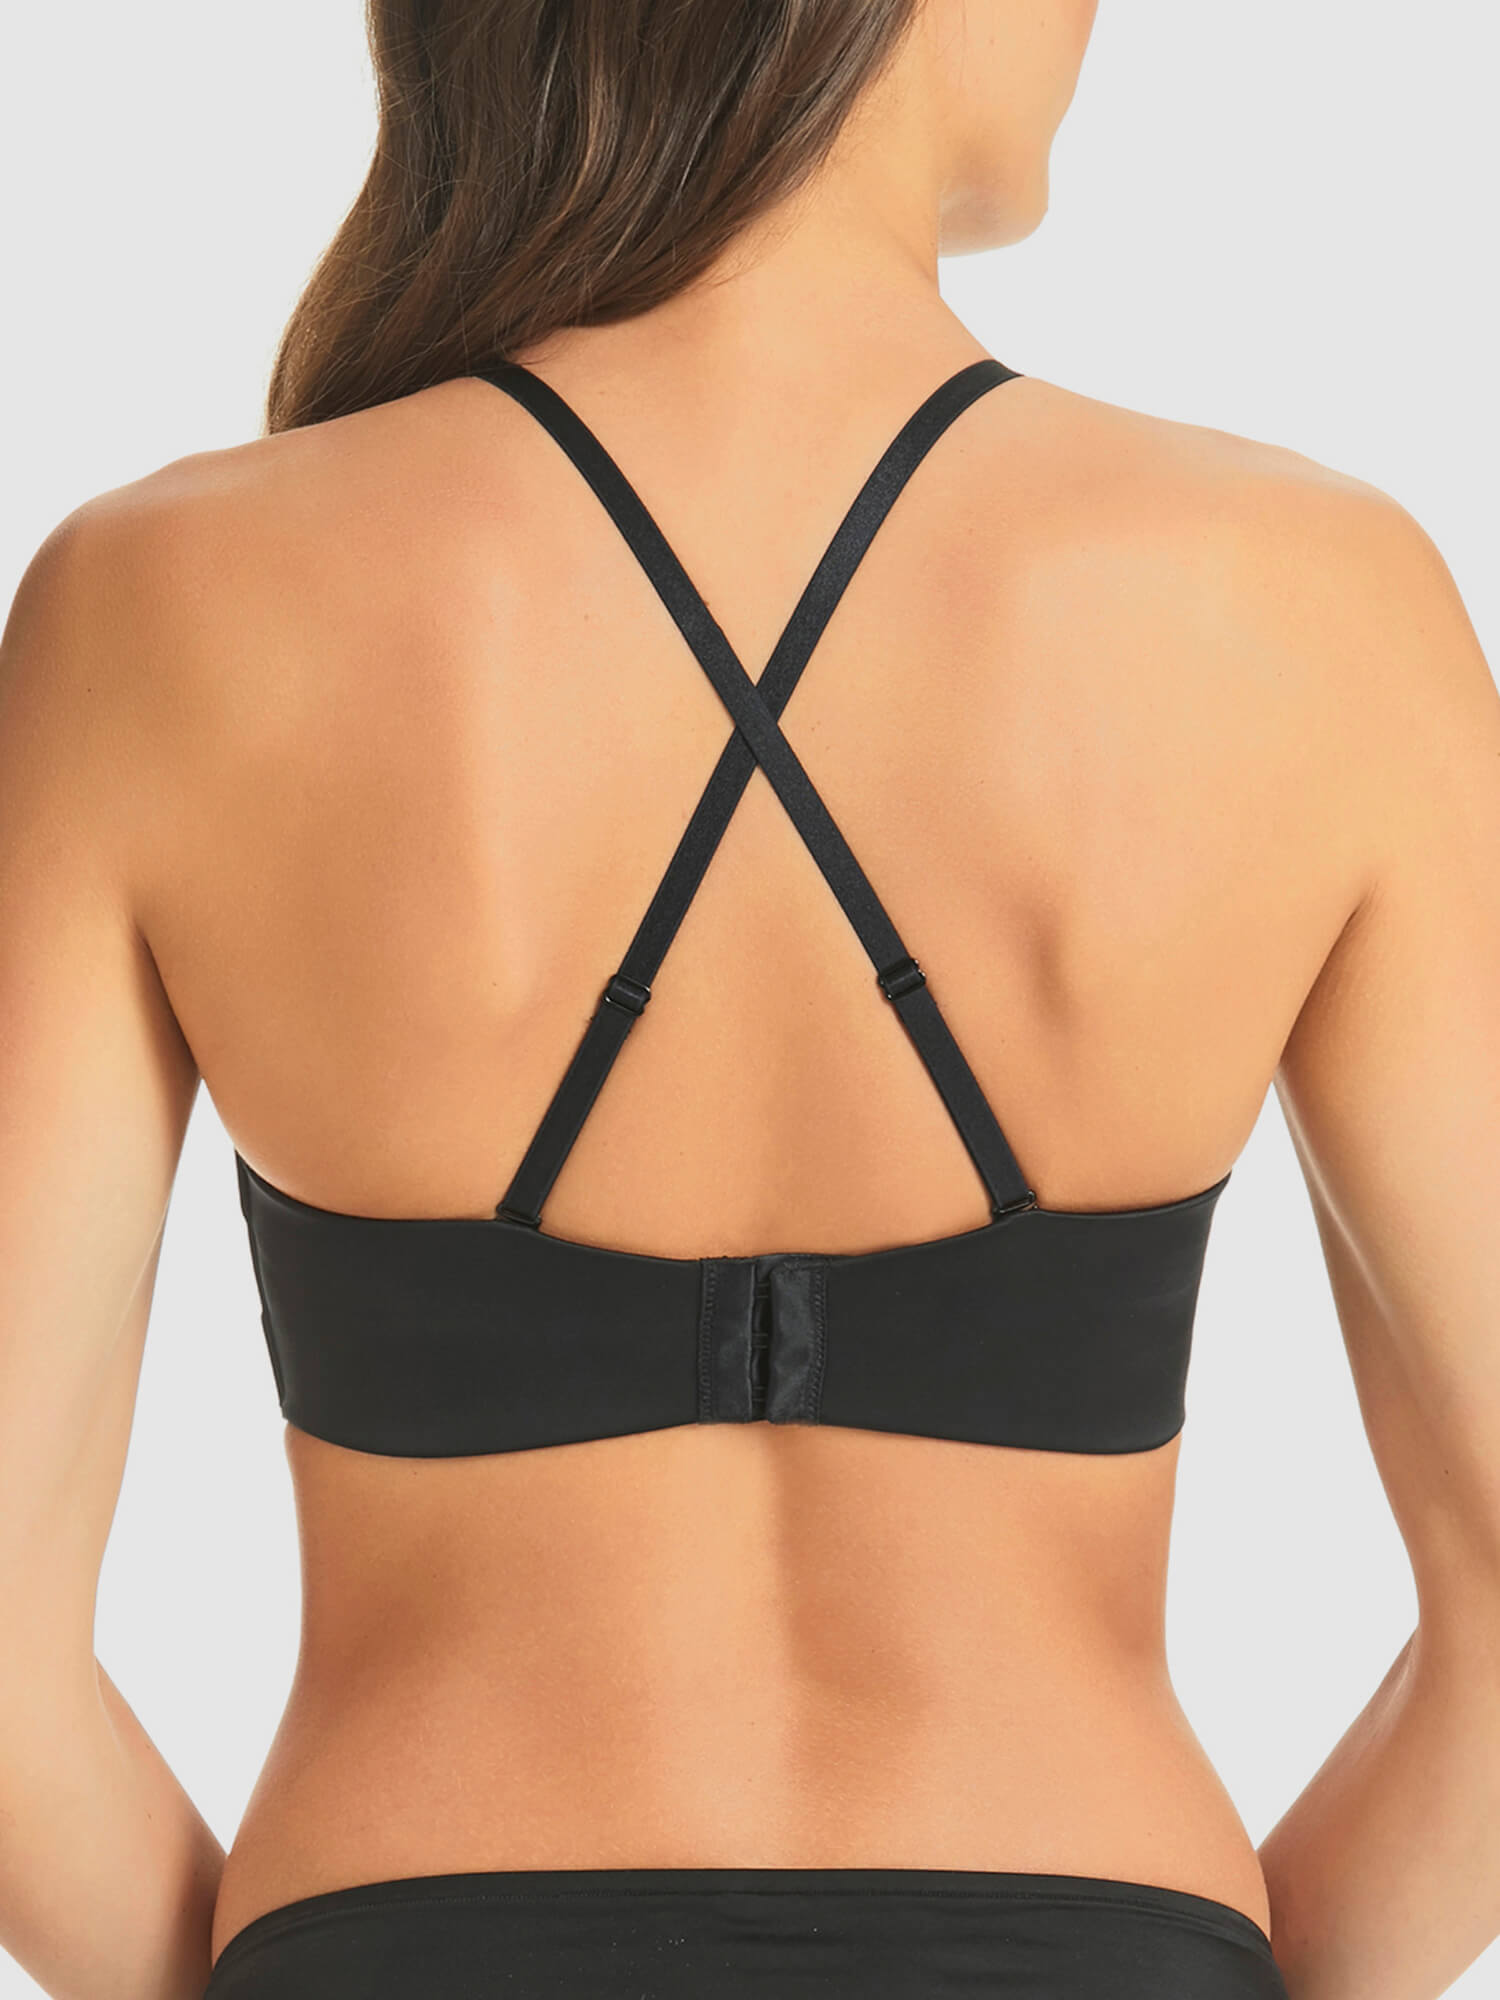 Wireless bras (Racer back/criss cross back), Buy online